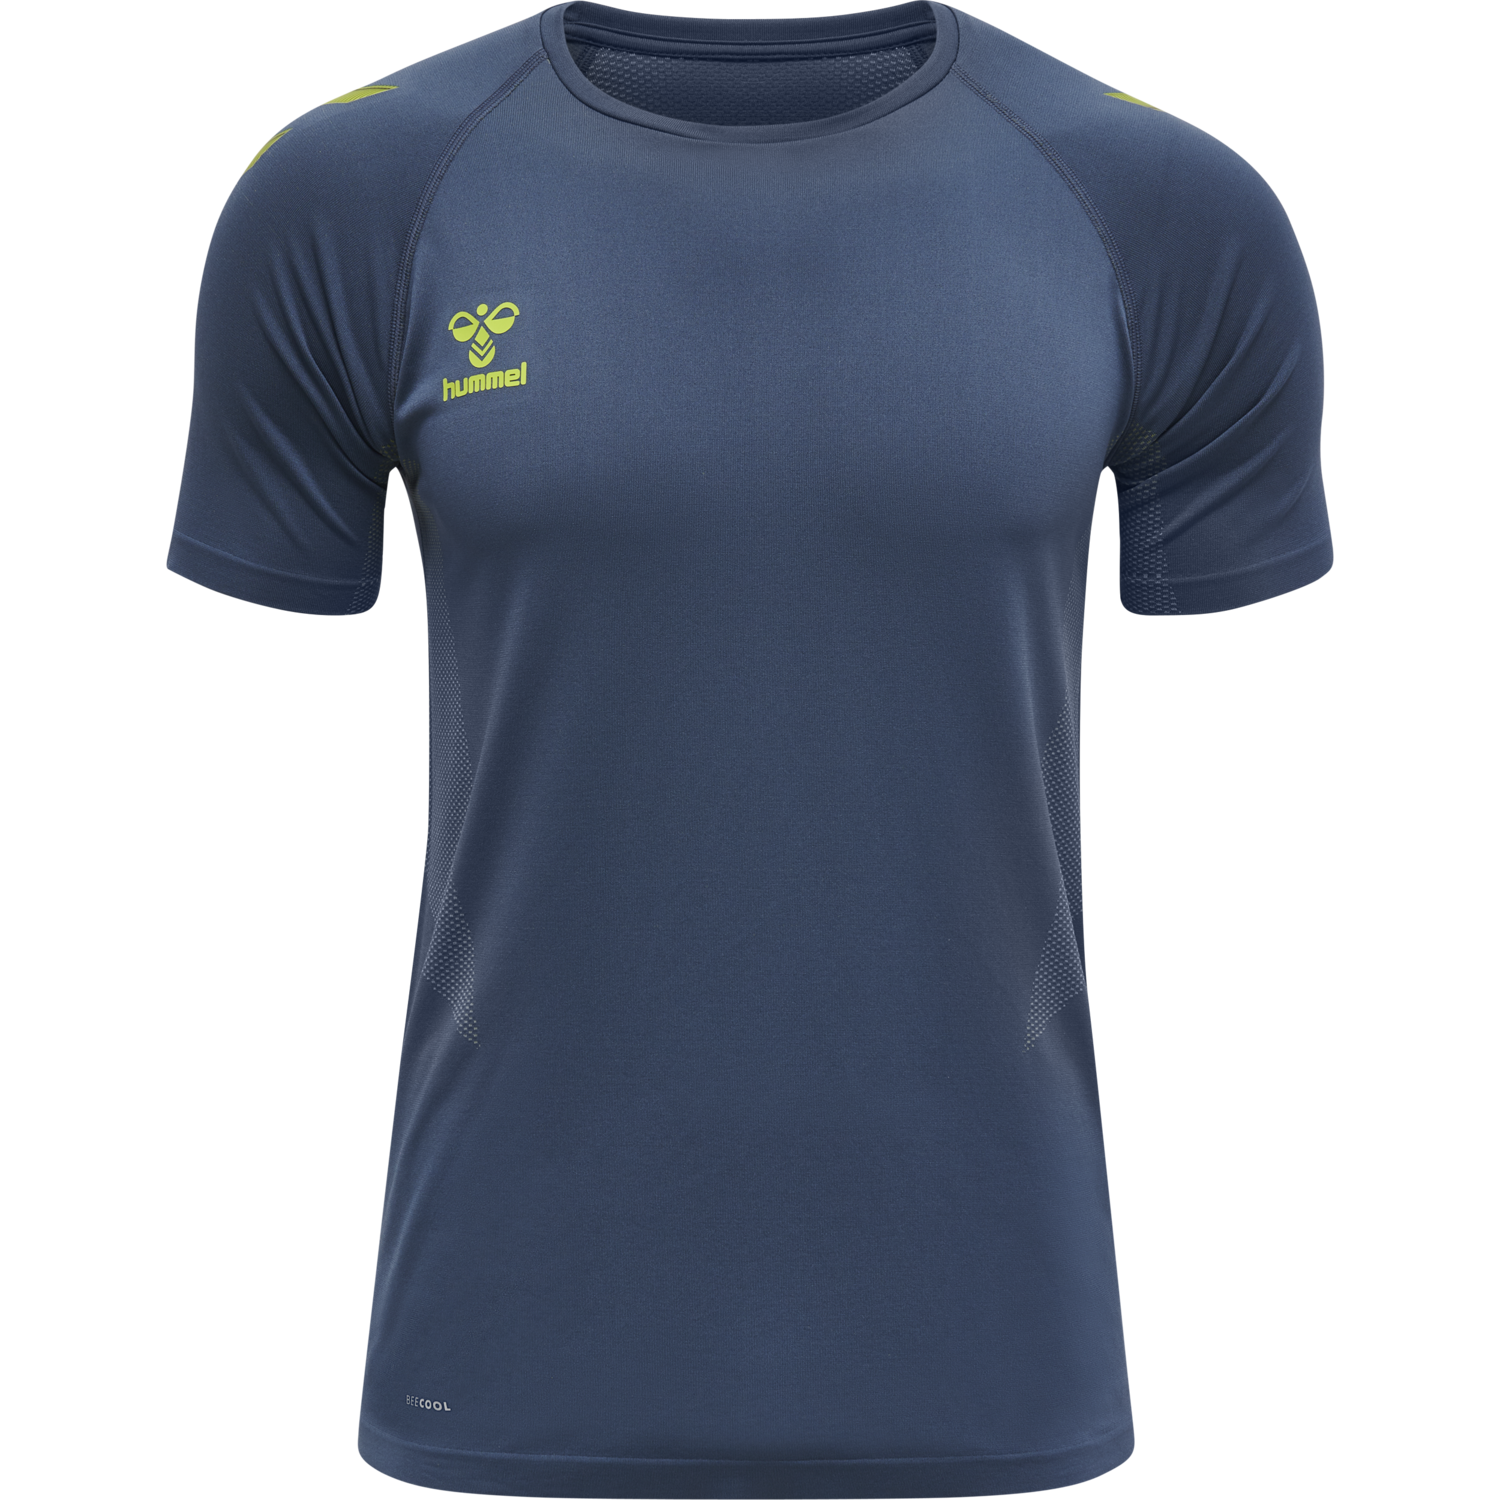 Details about   Hummel Football Soccer Lead Pro Mens Sport Training Short Sleeve SS Jersey Shirt 